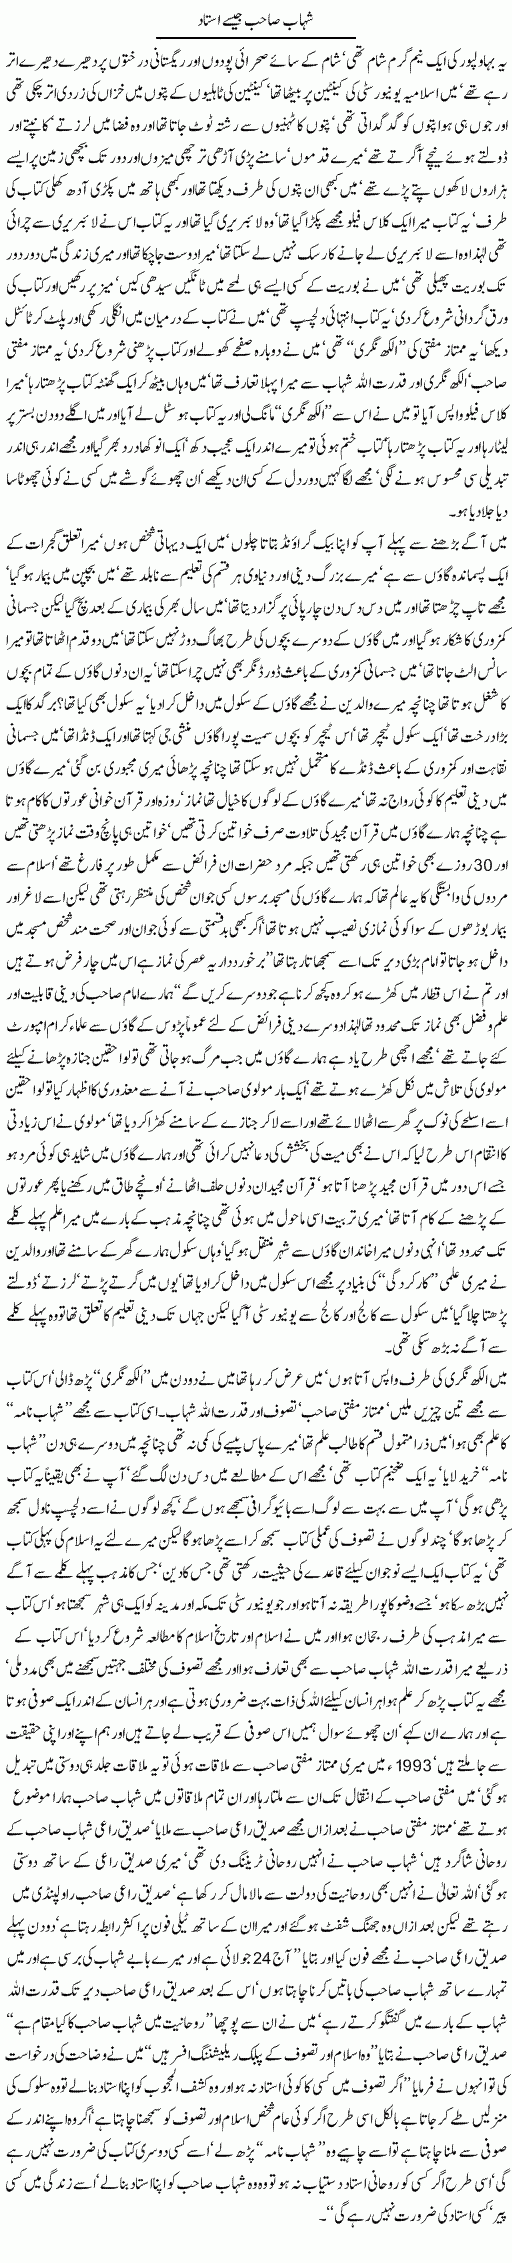 Shahab sahib jesay ustaad By Javed Chaudhry